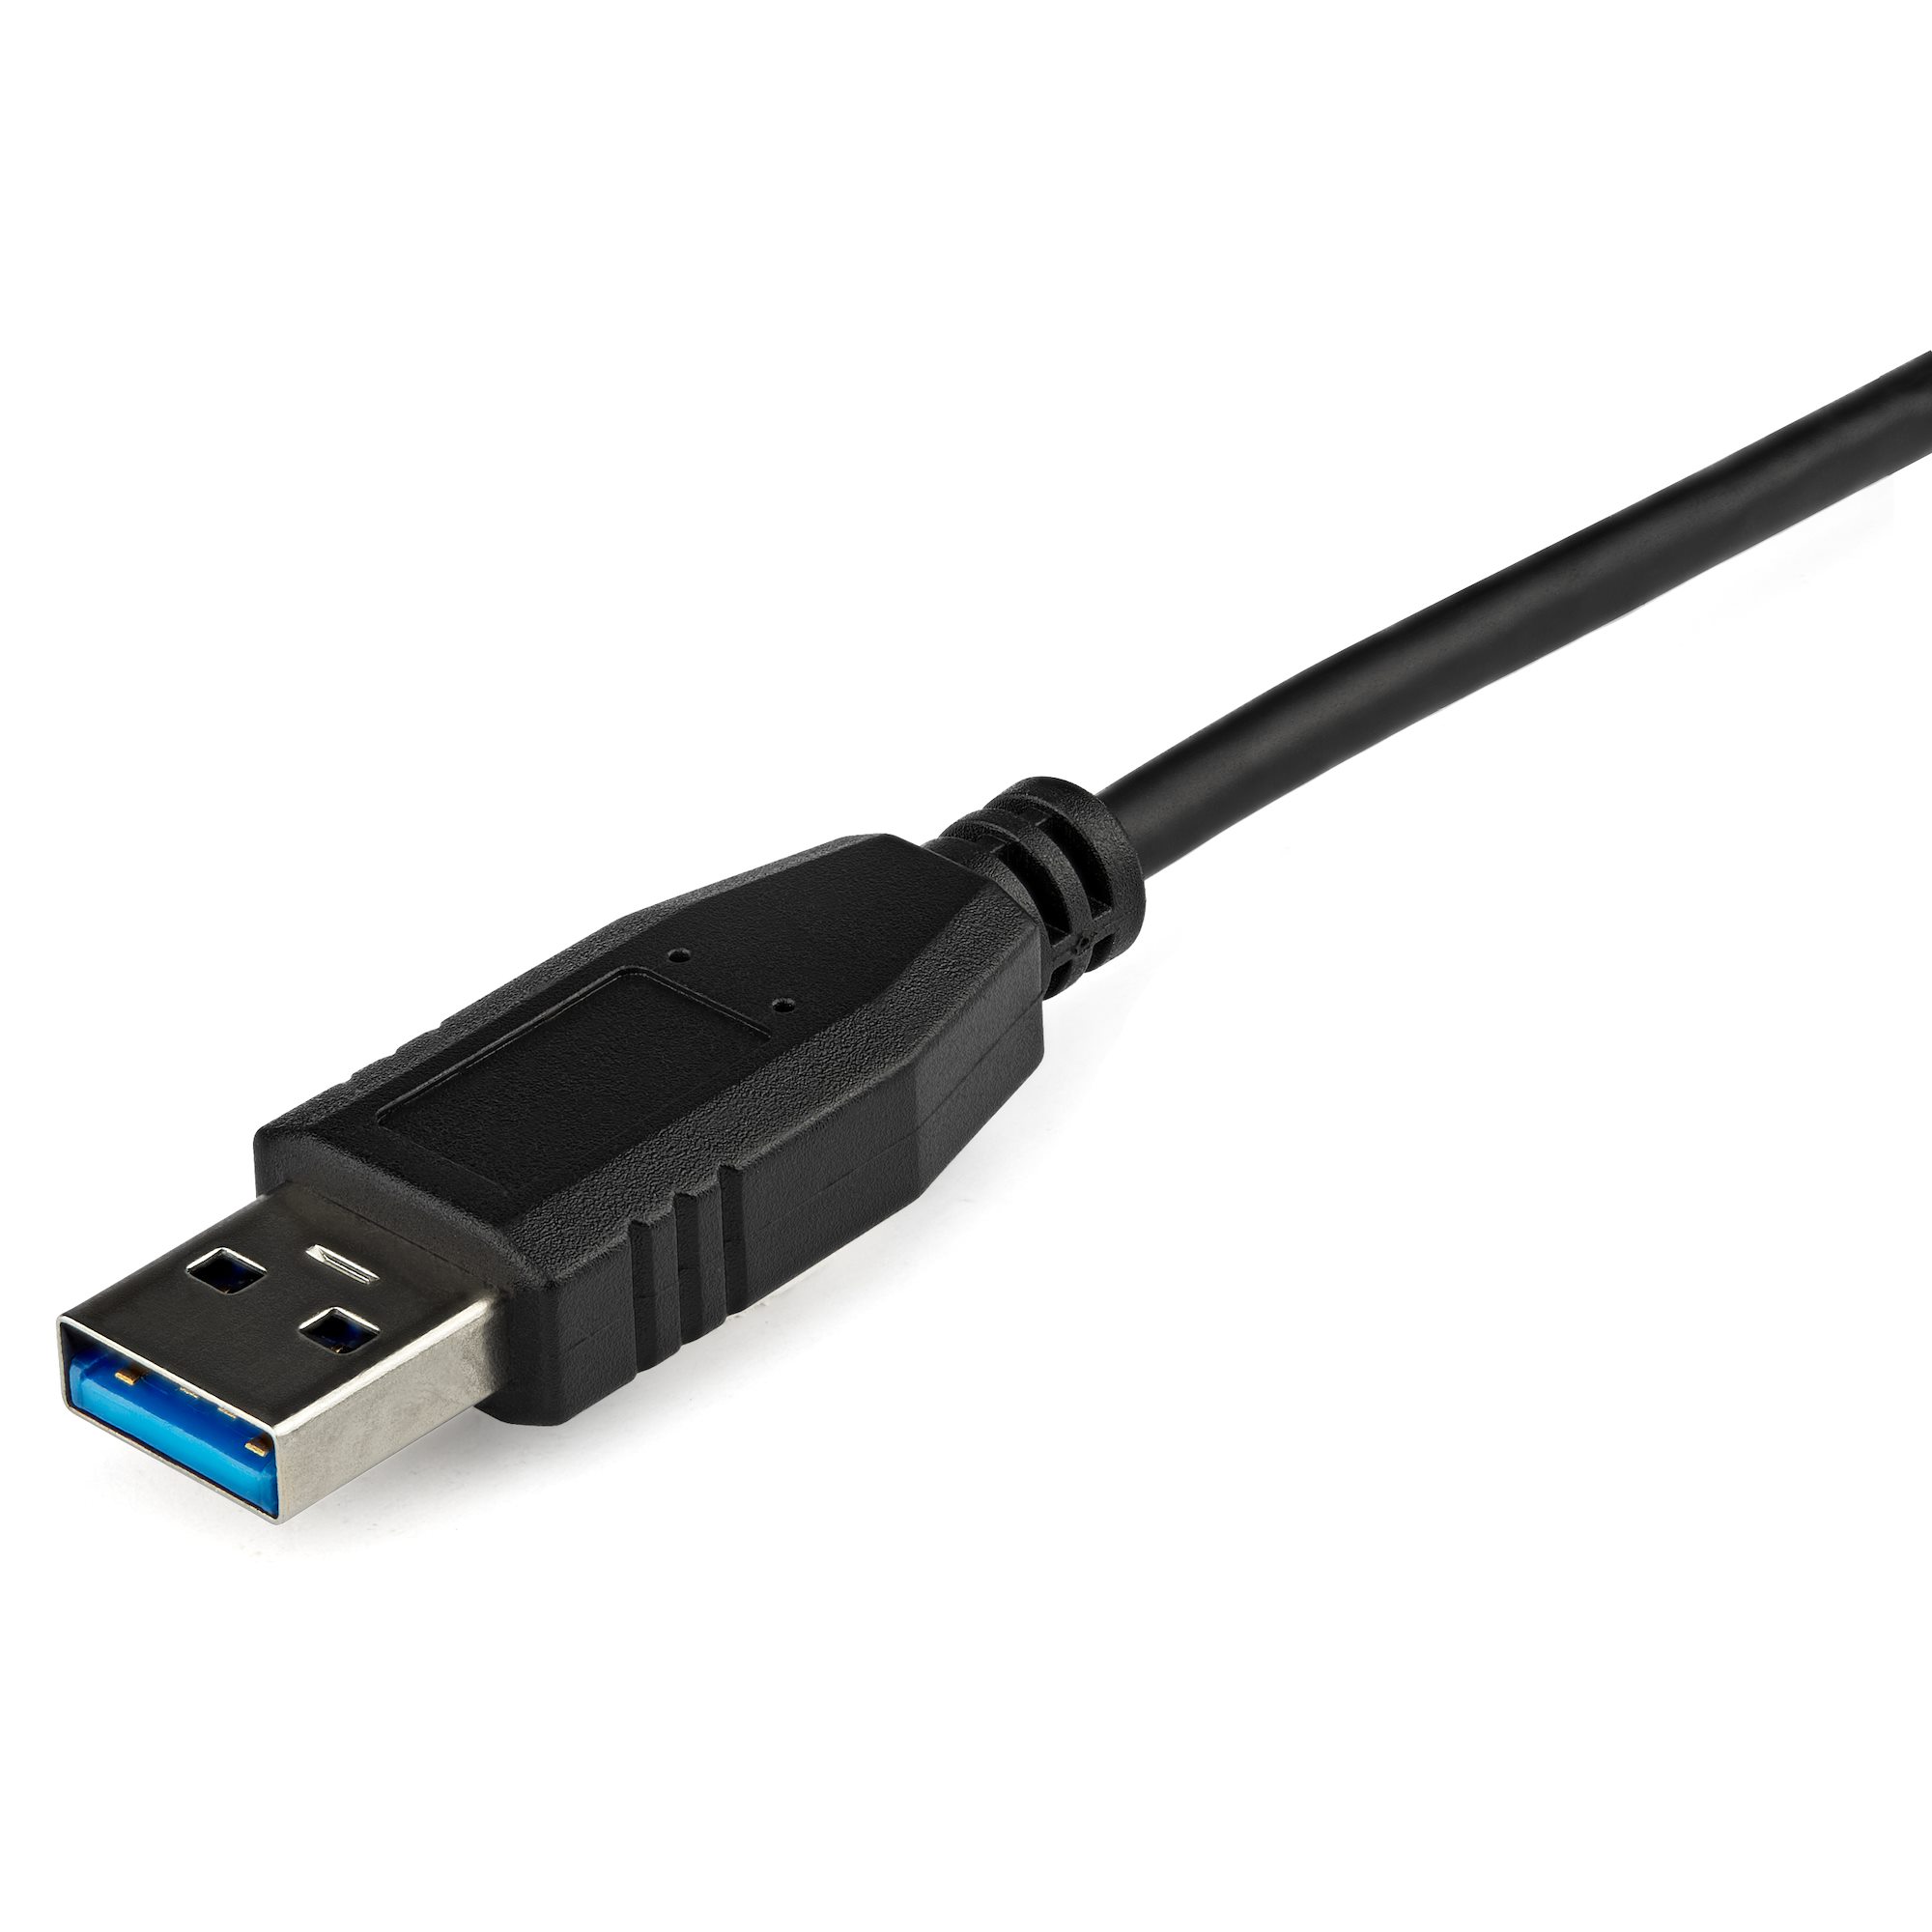 BLACK STARTECH.COM USB31000SPTB USB 3.0 GIGABIT ETHERNET ADAPTER WITH USB PORT 